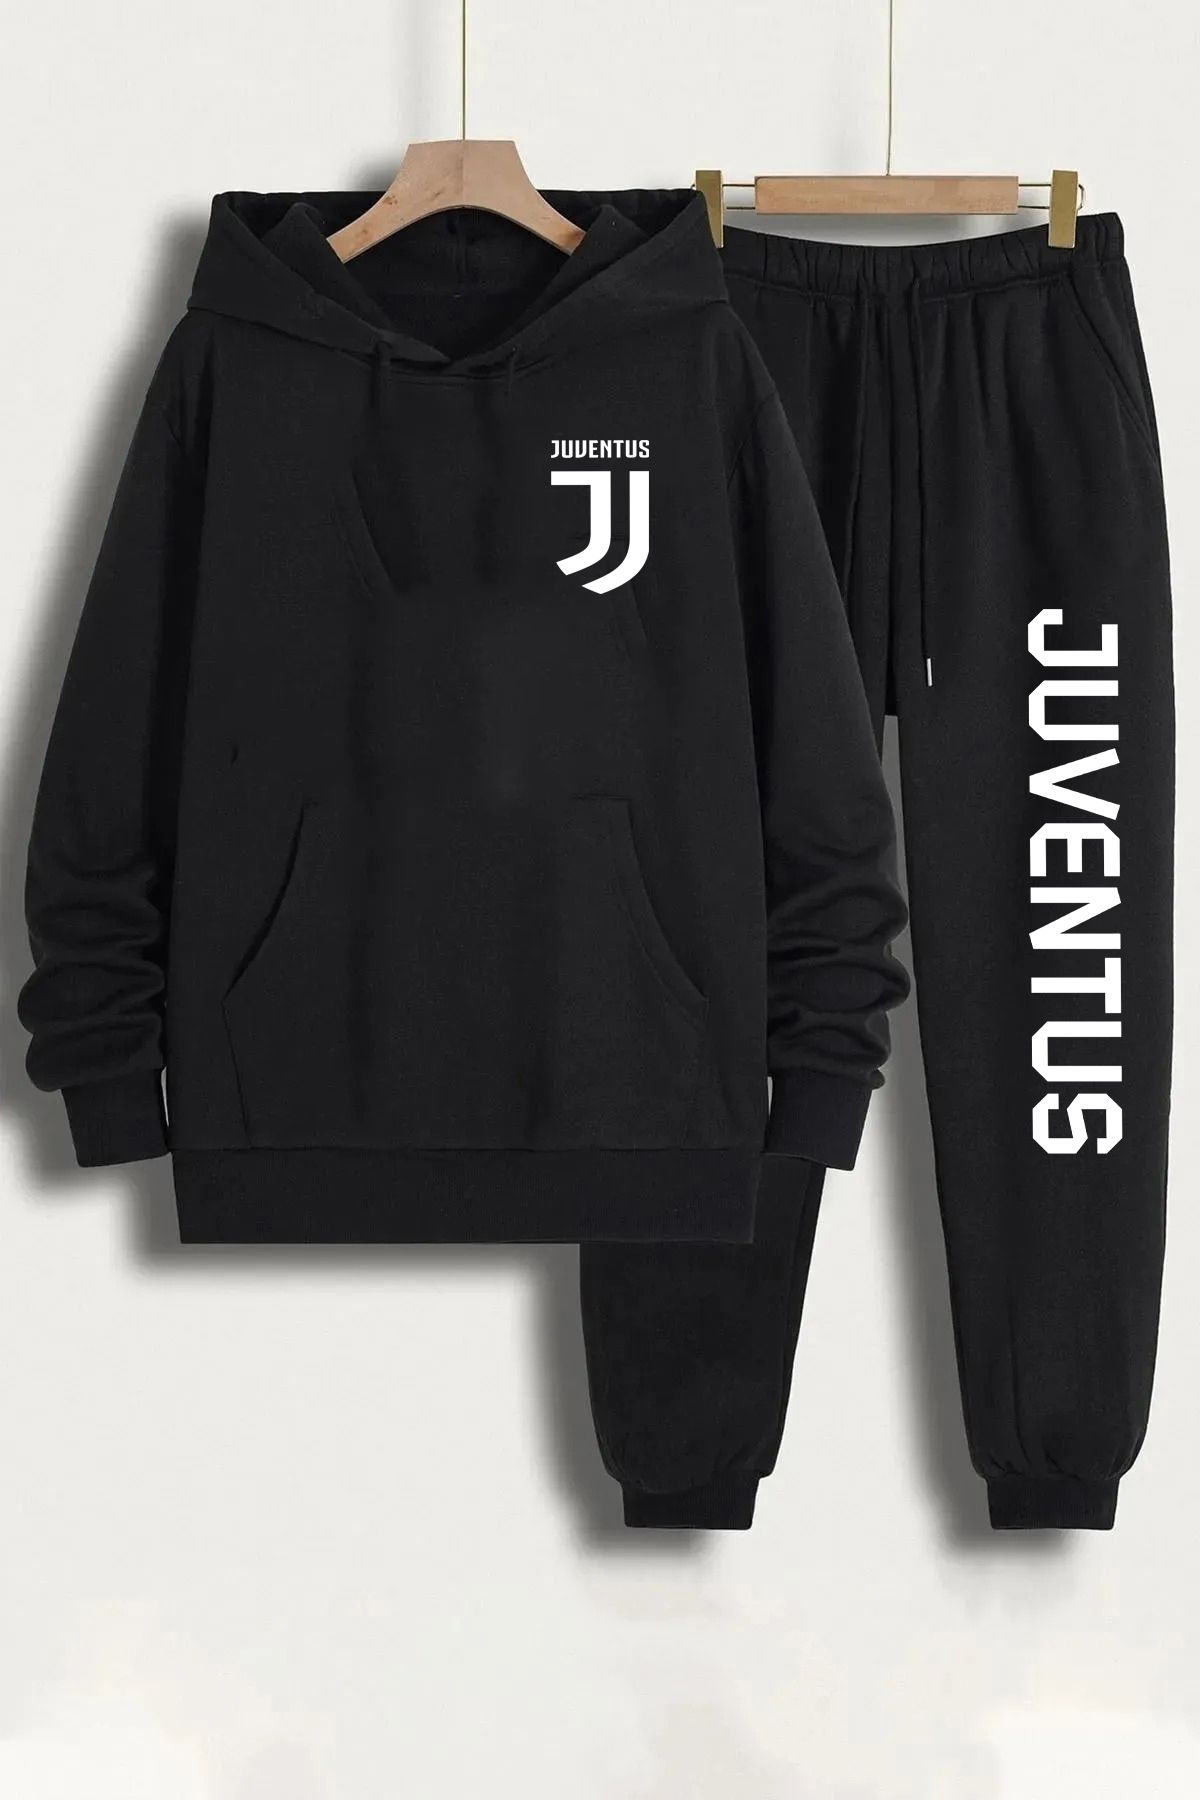 Pisa Art Juventus Sweatshirt + Eşofman Altı Takım